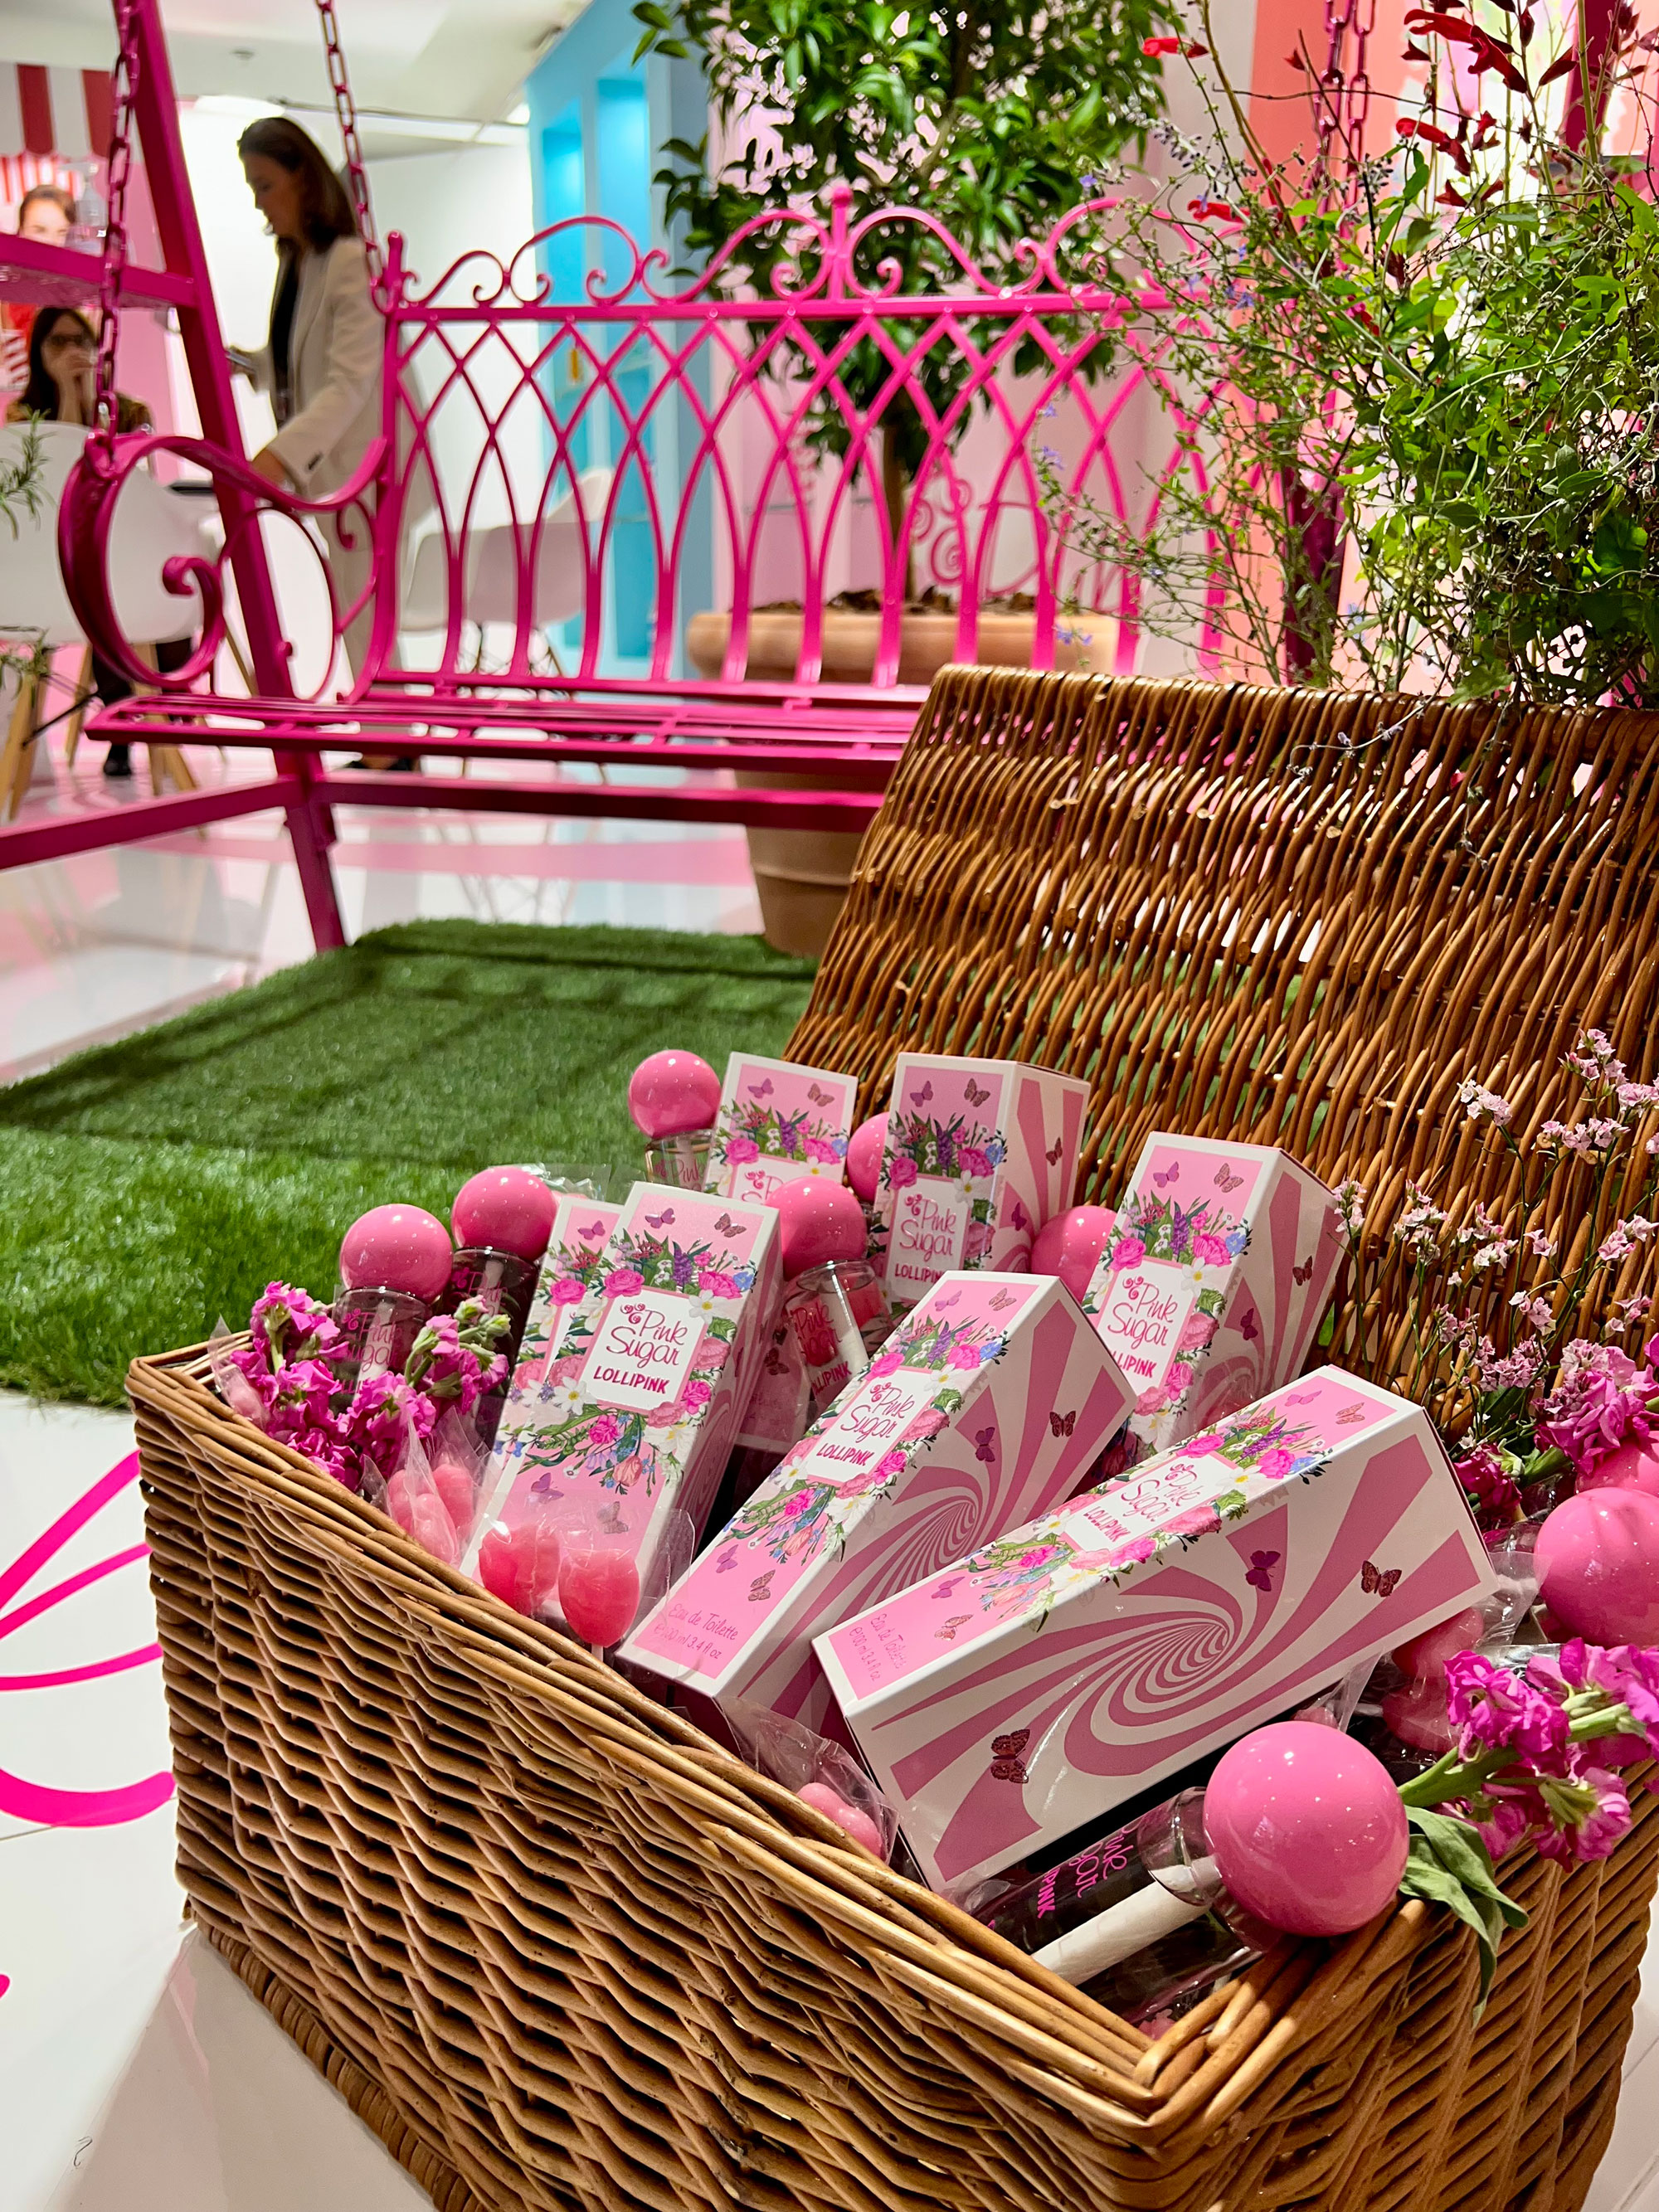 Pink Sugar - Fragranza dolcezza assoluta